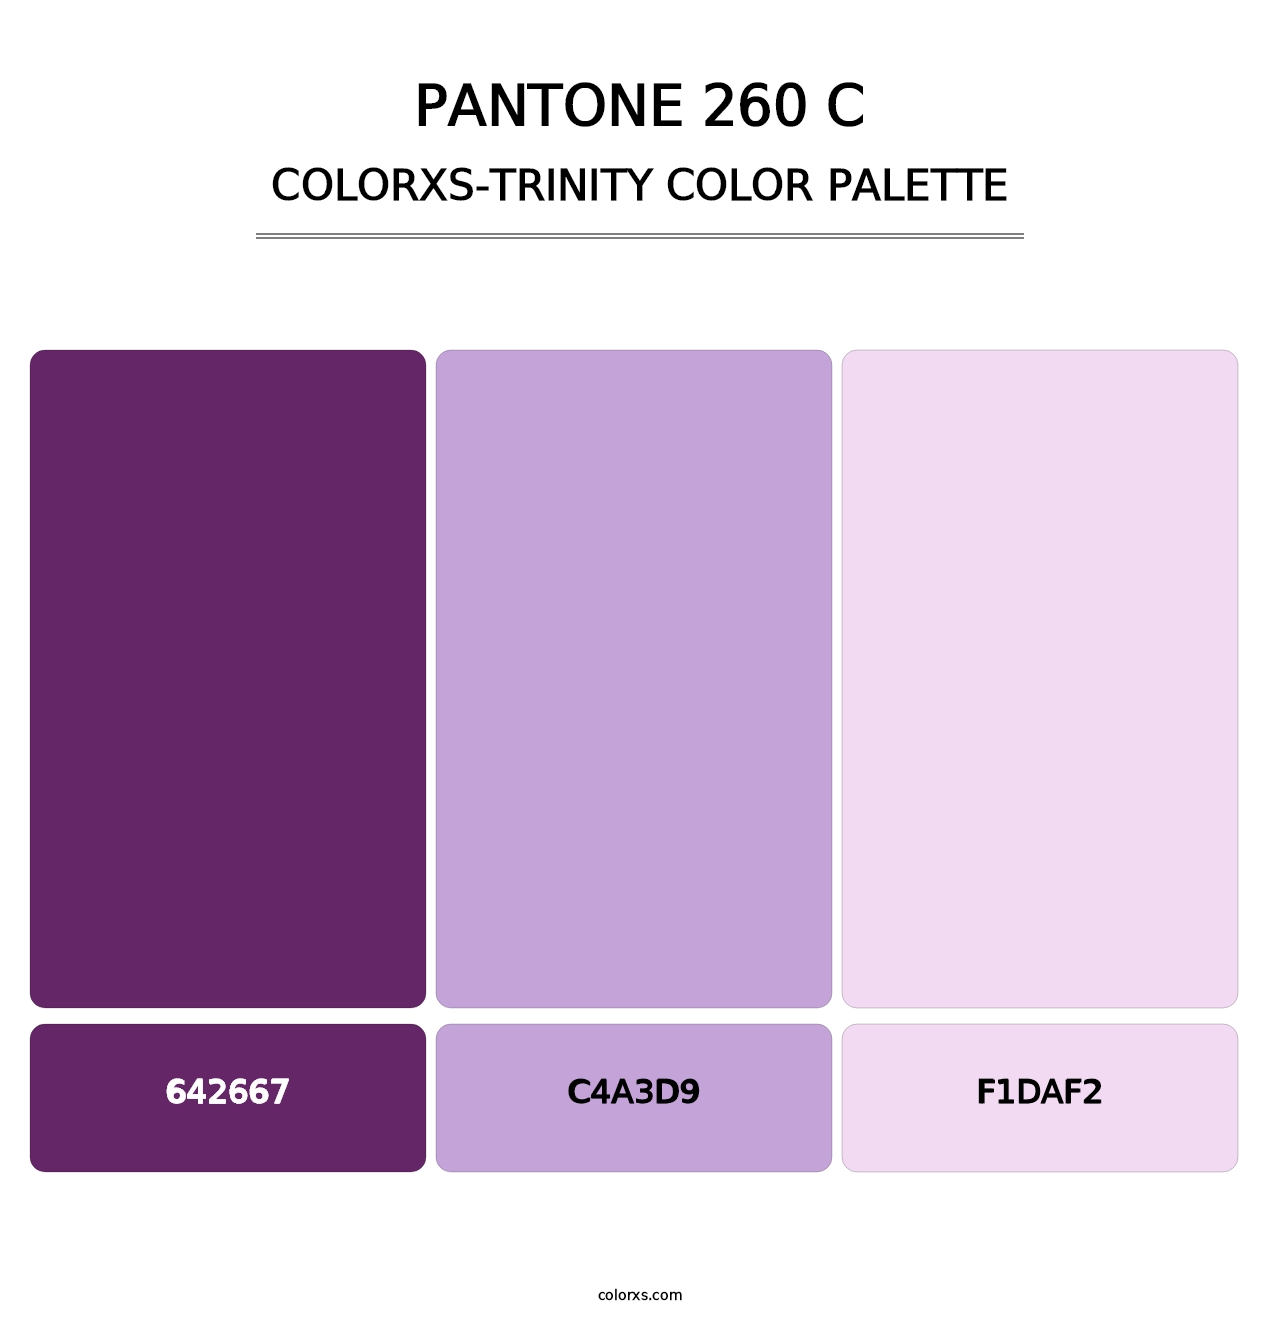 PANTONE 260 C - Colorxs Trinity Palette